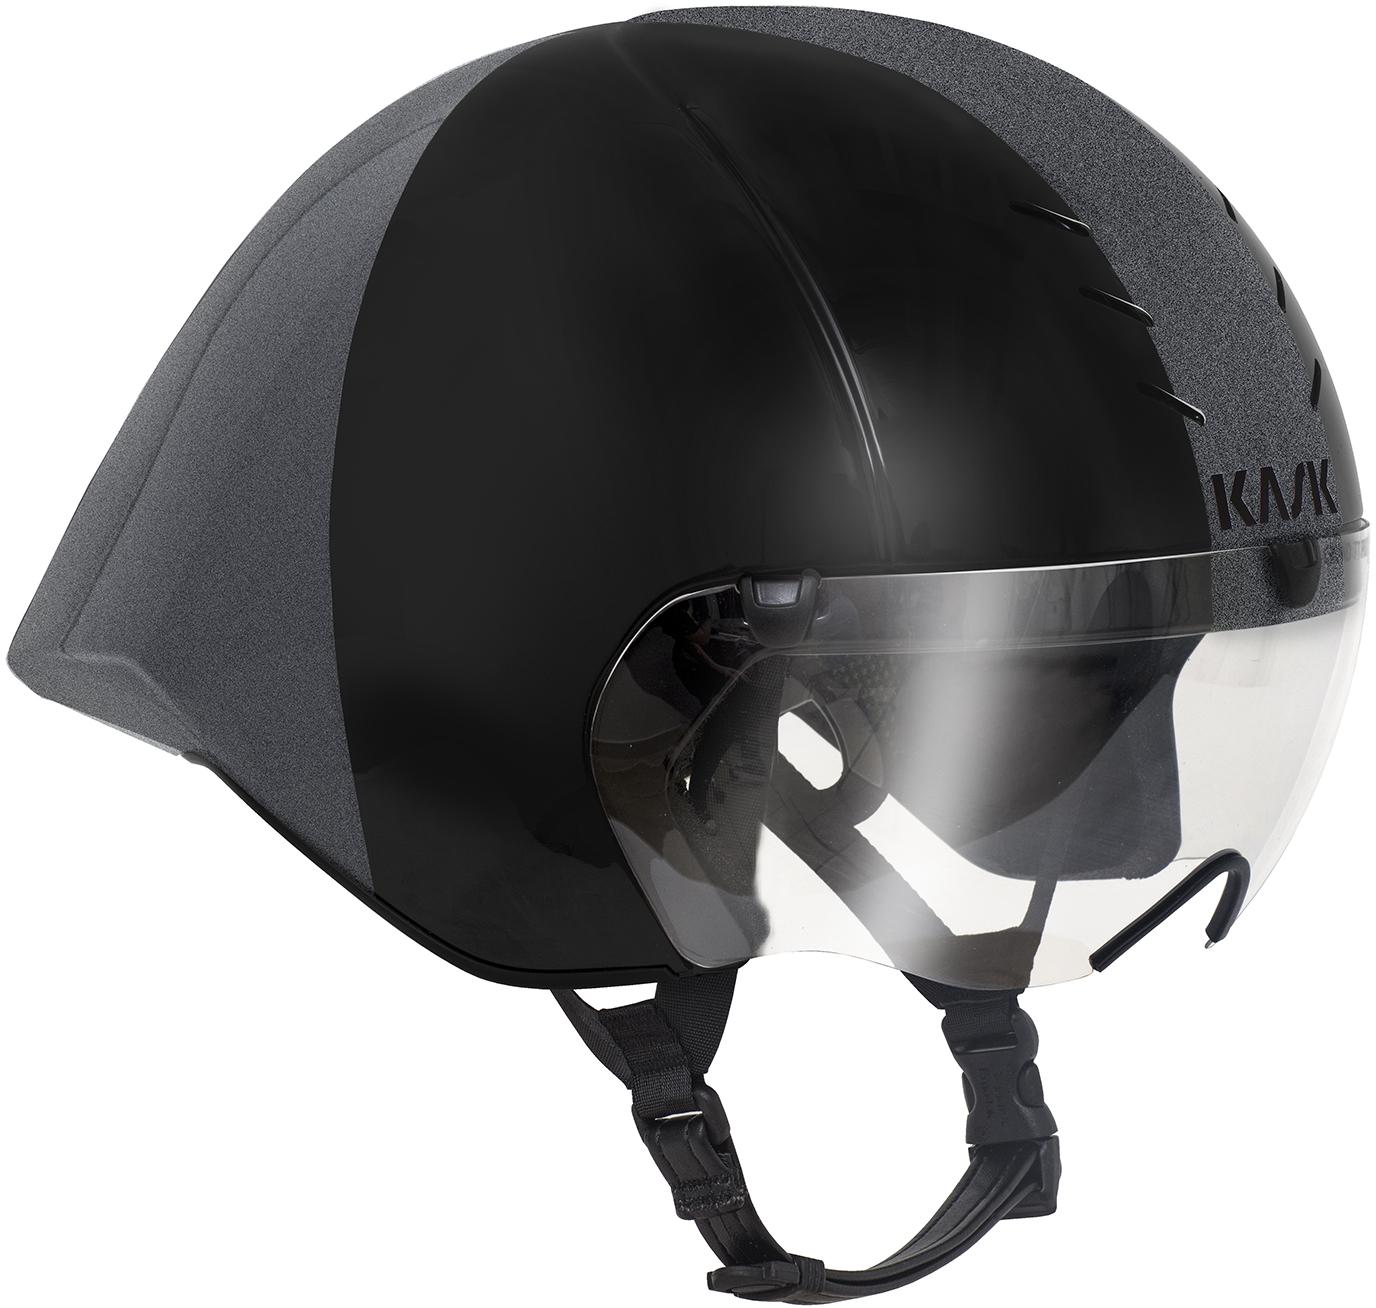 Kask Mistral Aero Helmet  Black/grey